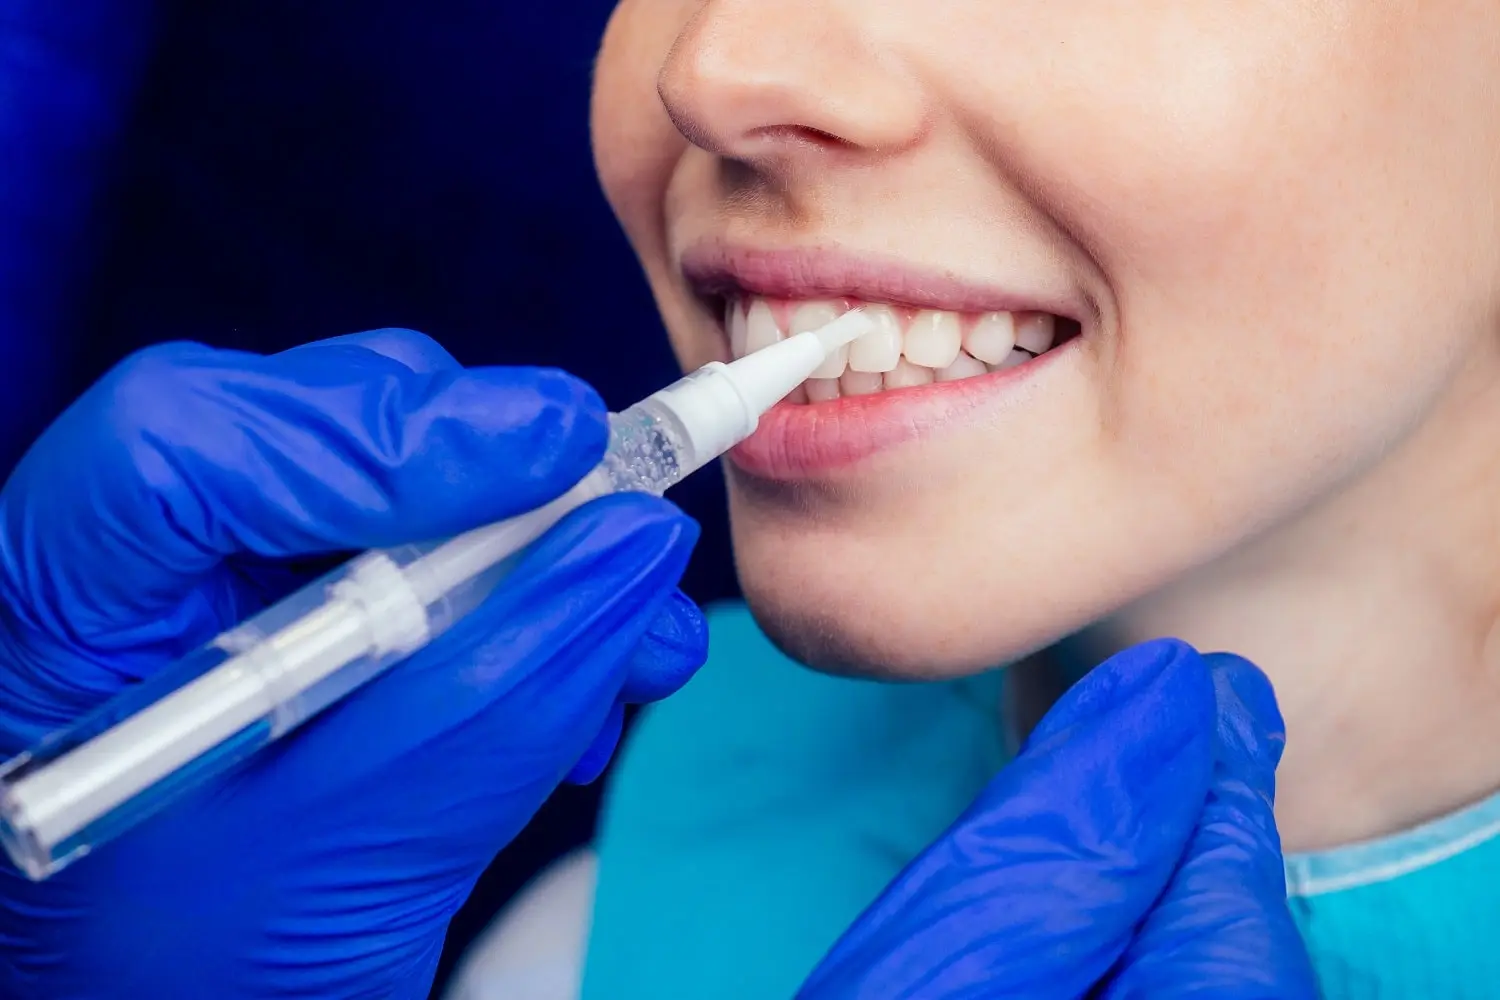 dentist-checking-dental-cavities-under-crowns